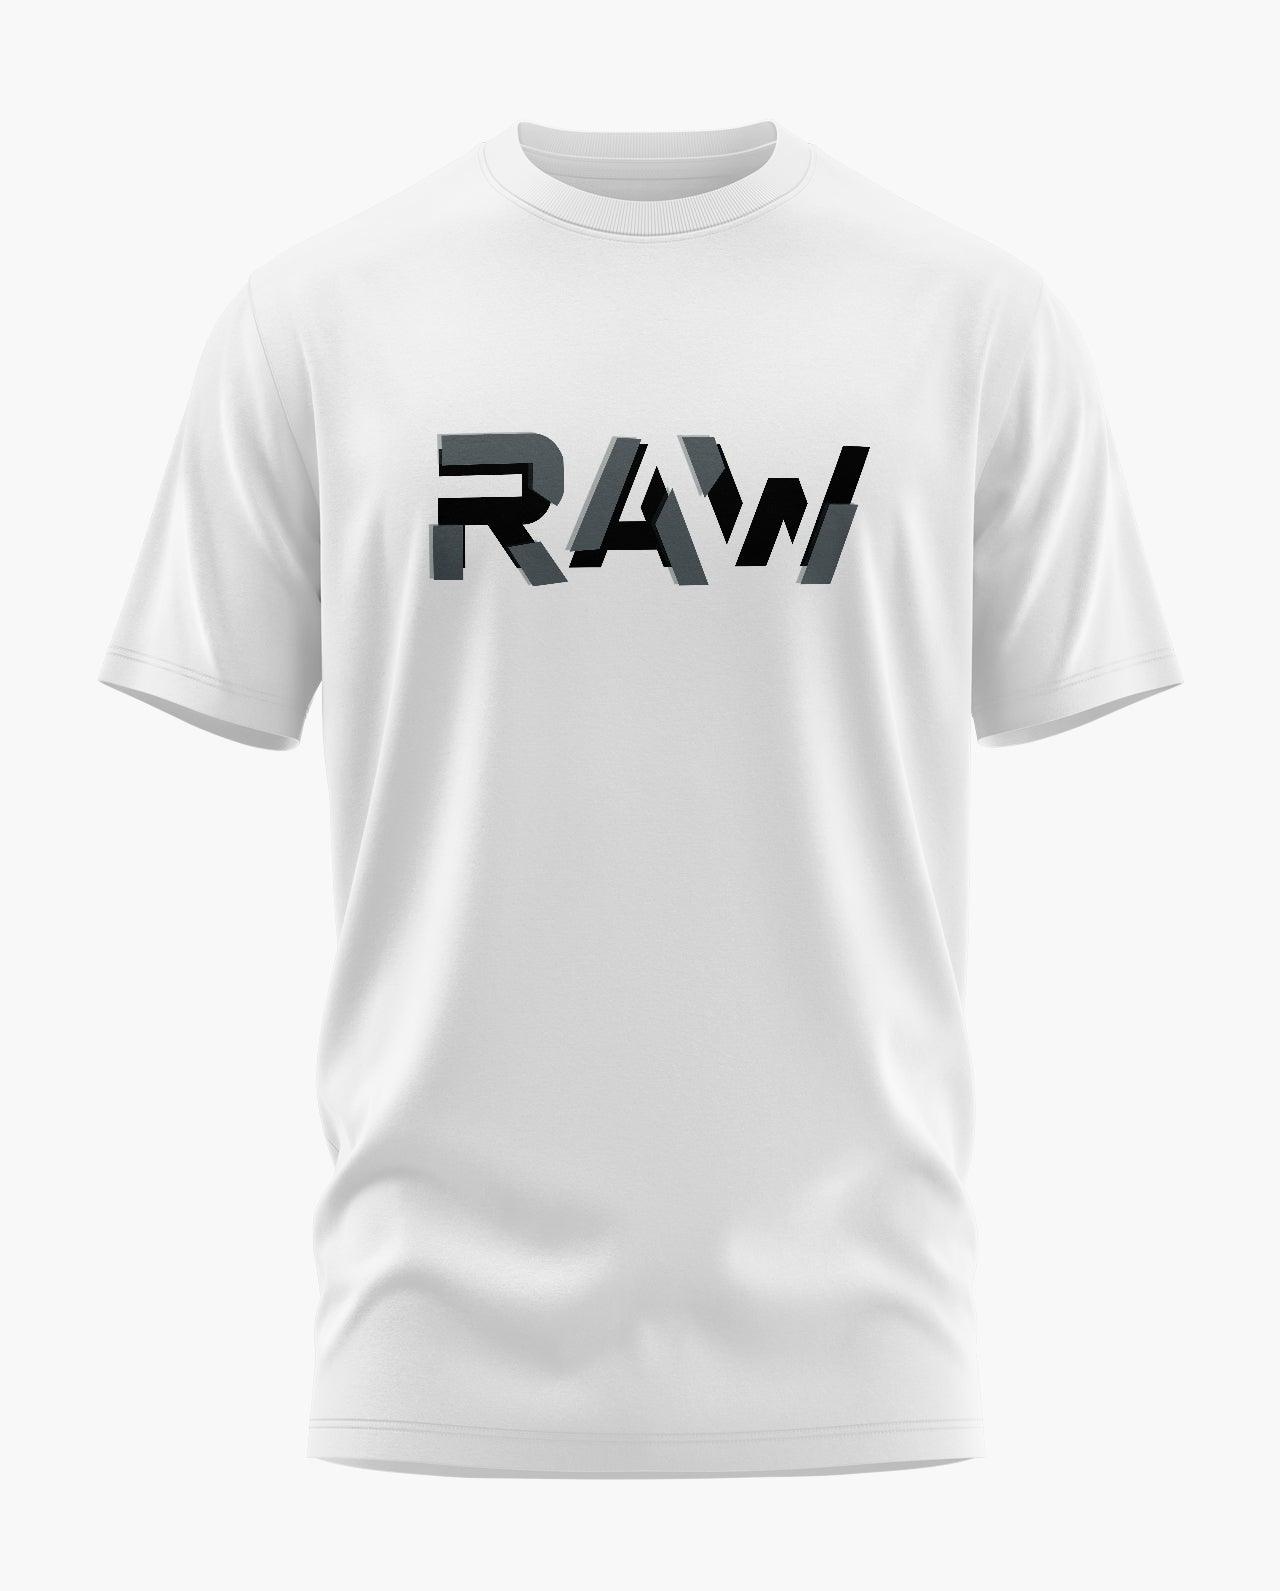 Raw T-Shirt - Aero Armour